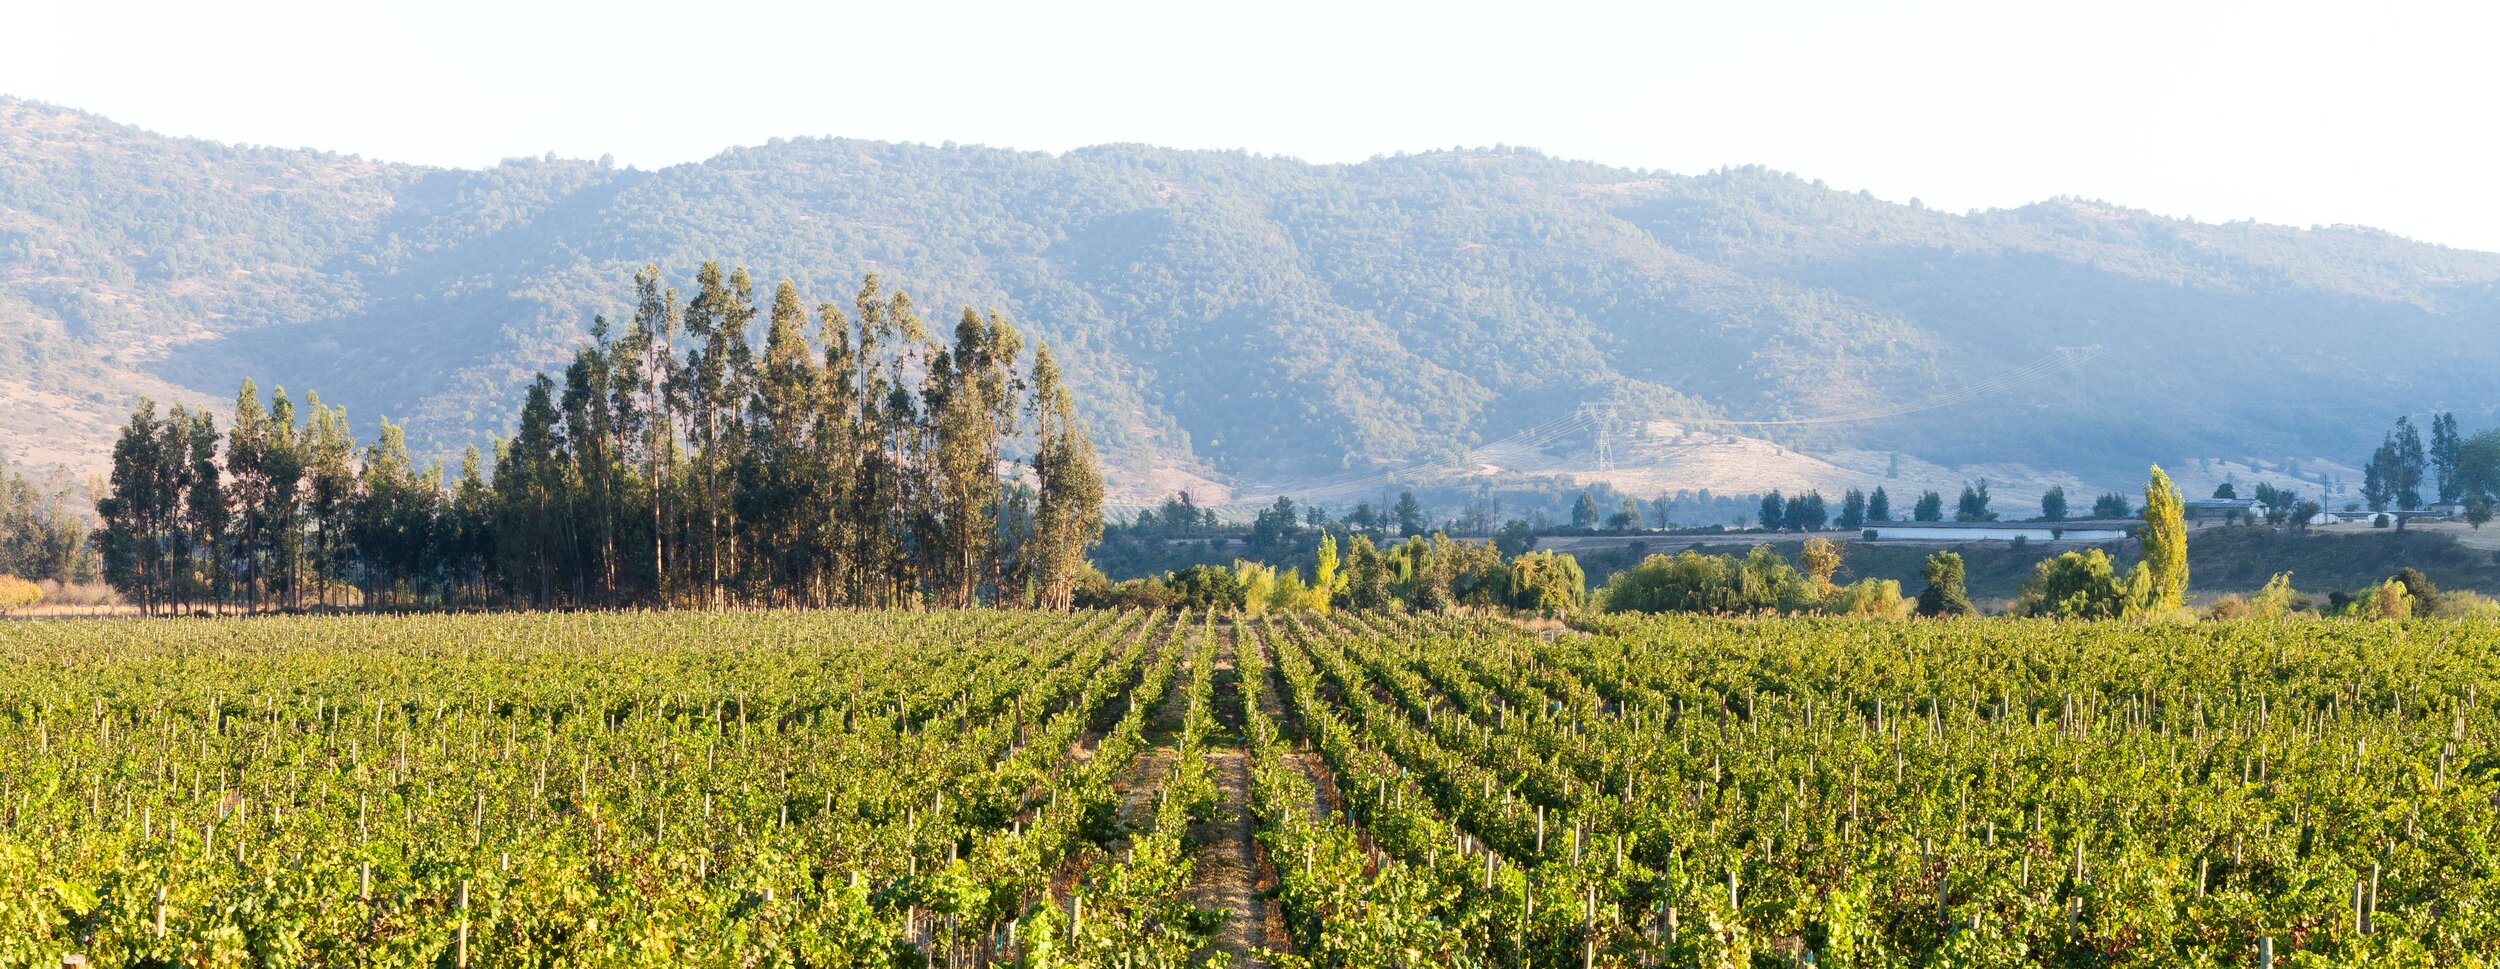 Vistamar Reserva Chardonnay